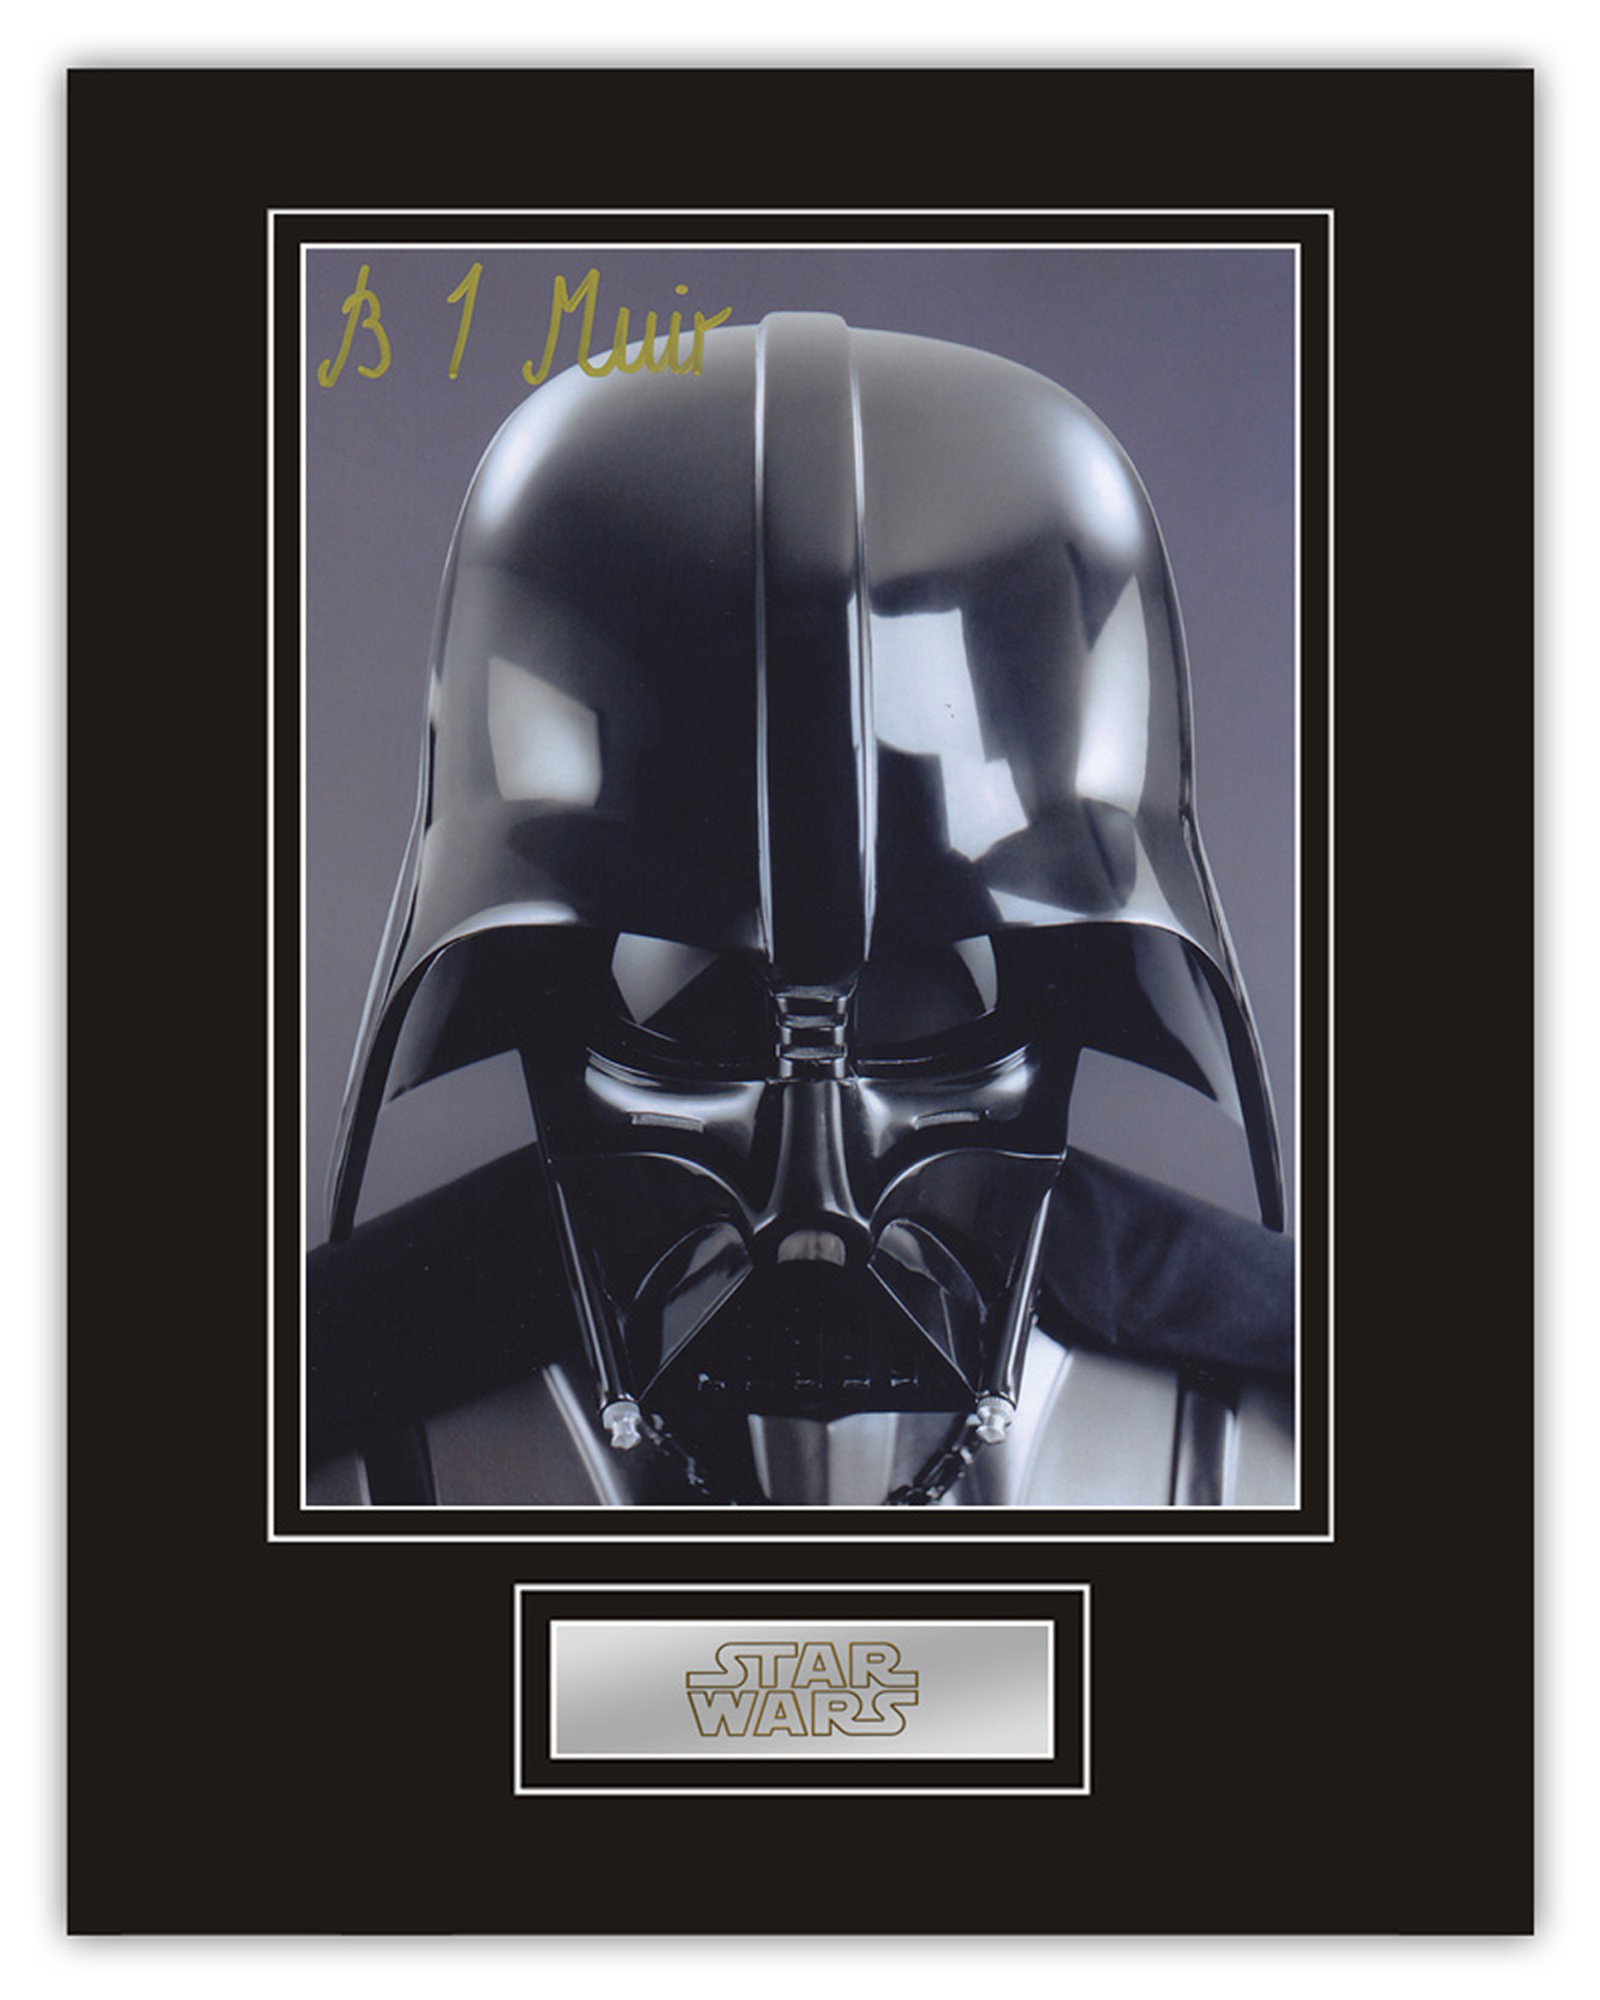 Star Wars Displays autographs of James Earl Jones and Brian Muir - Image 2 of 3